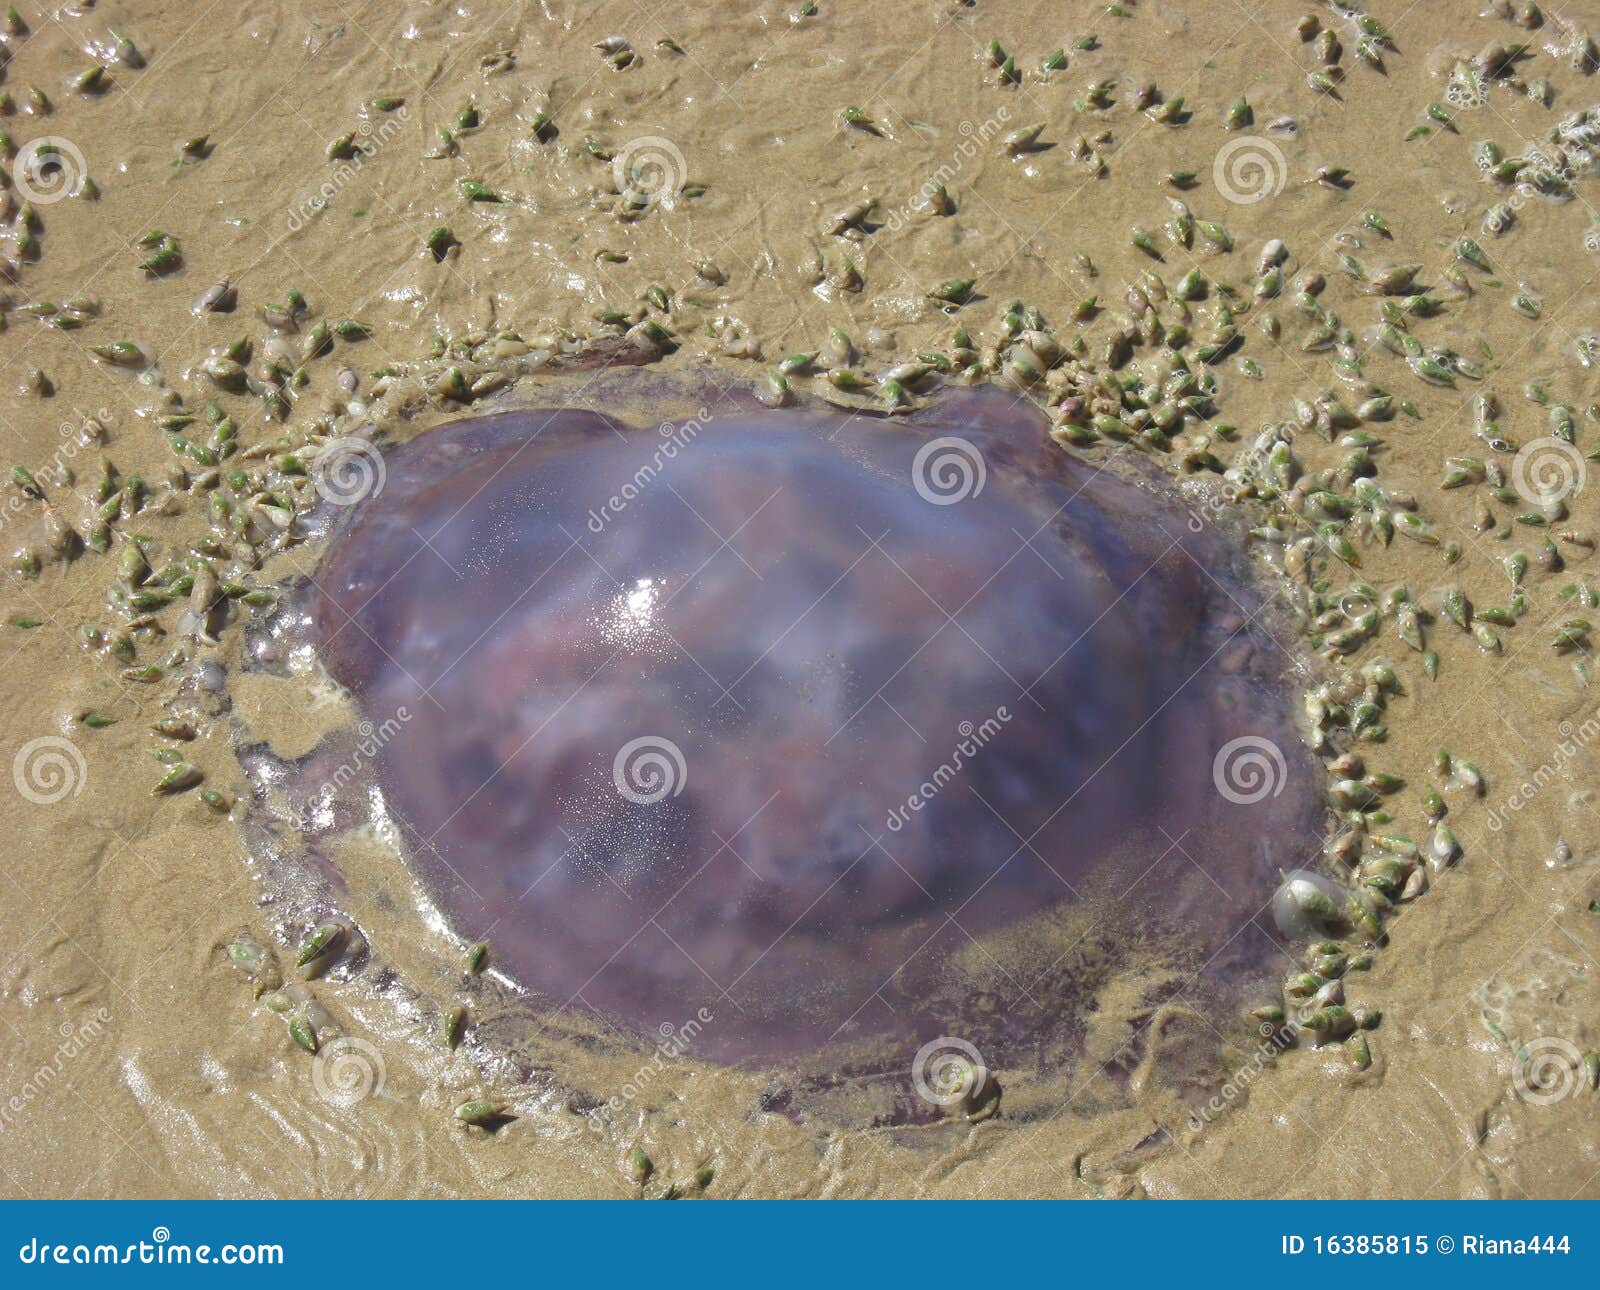 stranded jellyfish